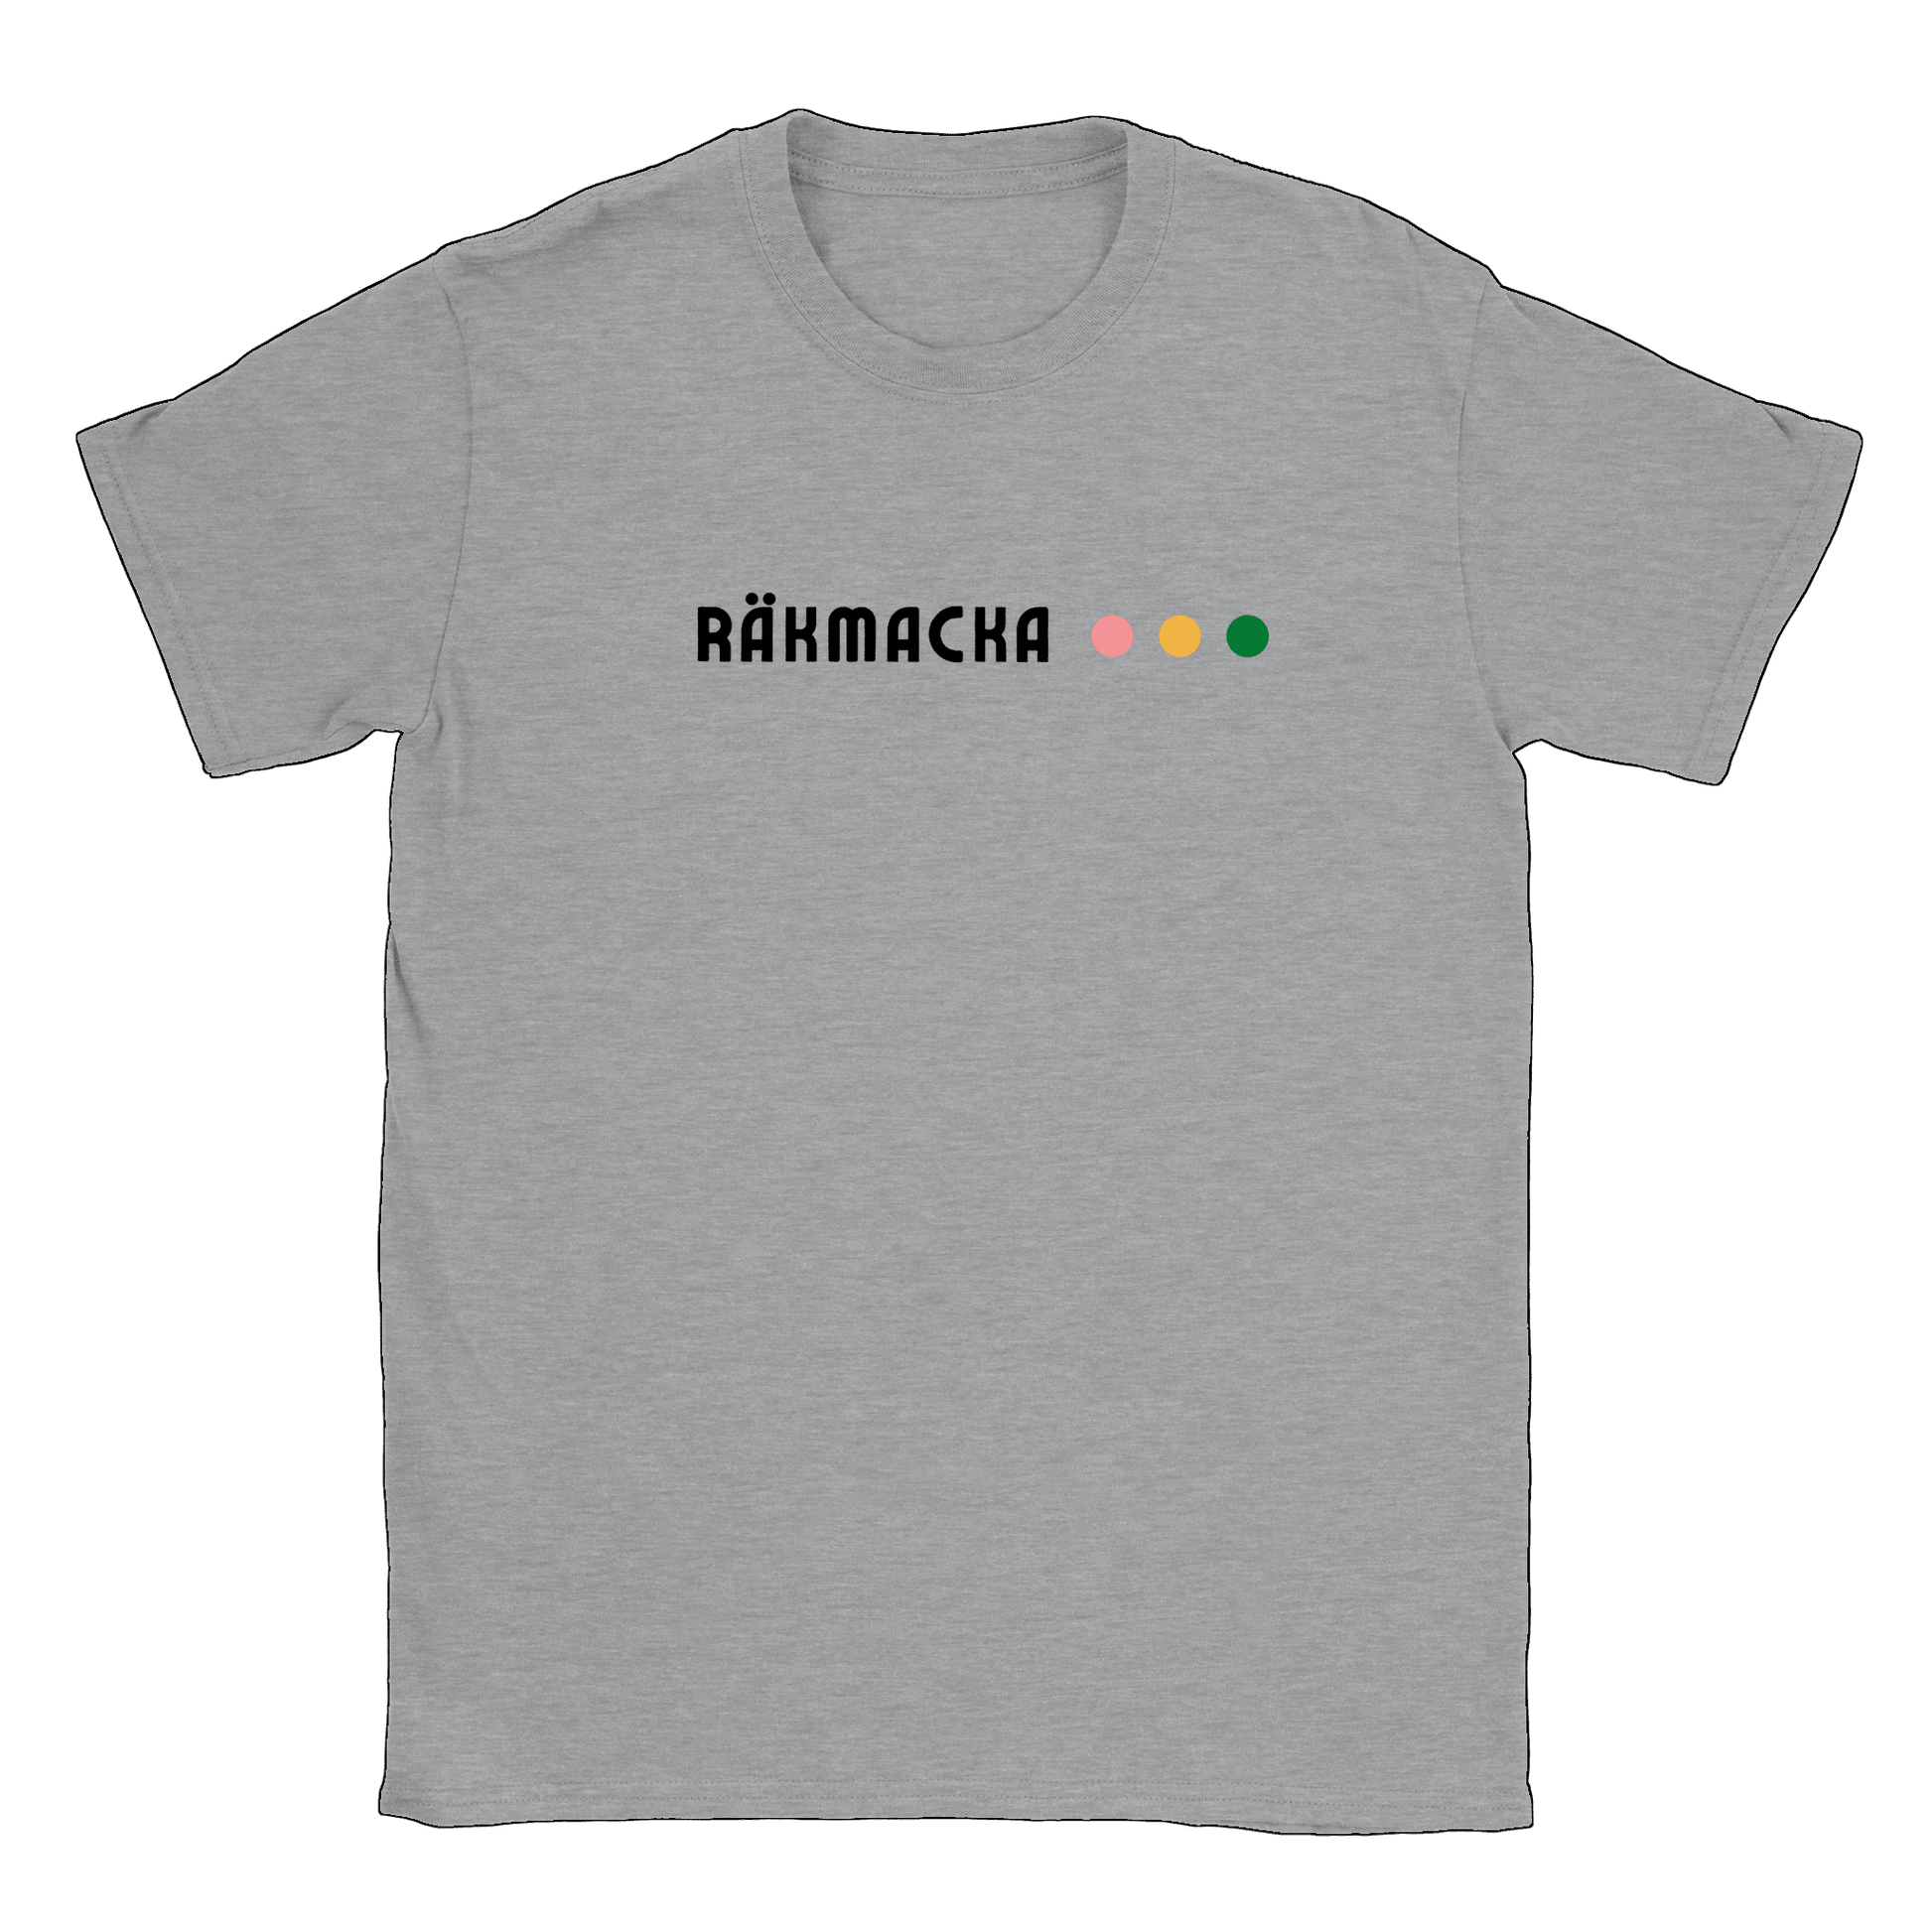 Räkmacka - T-shirt Grå